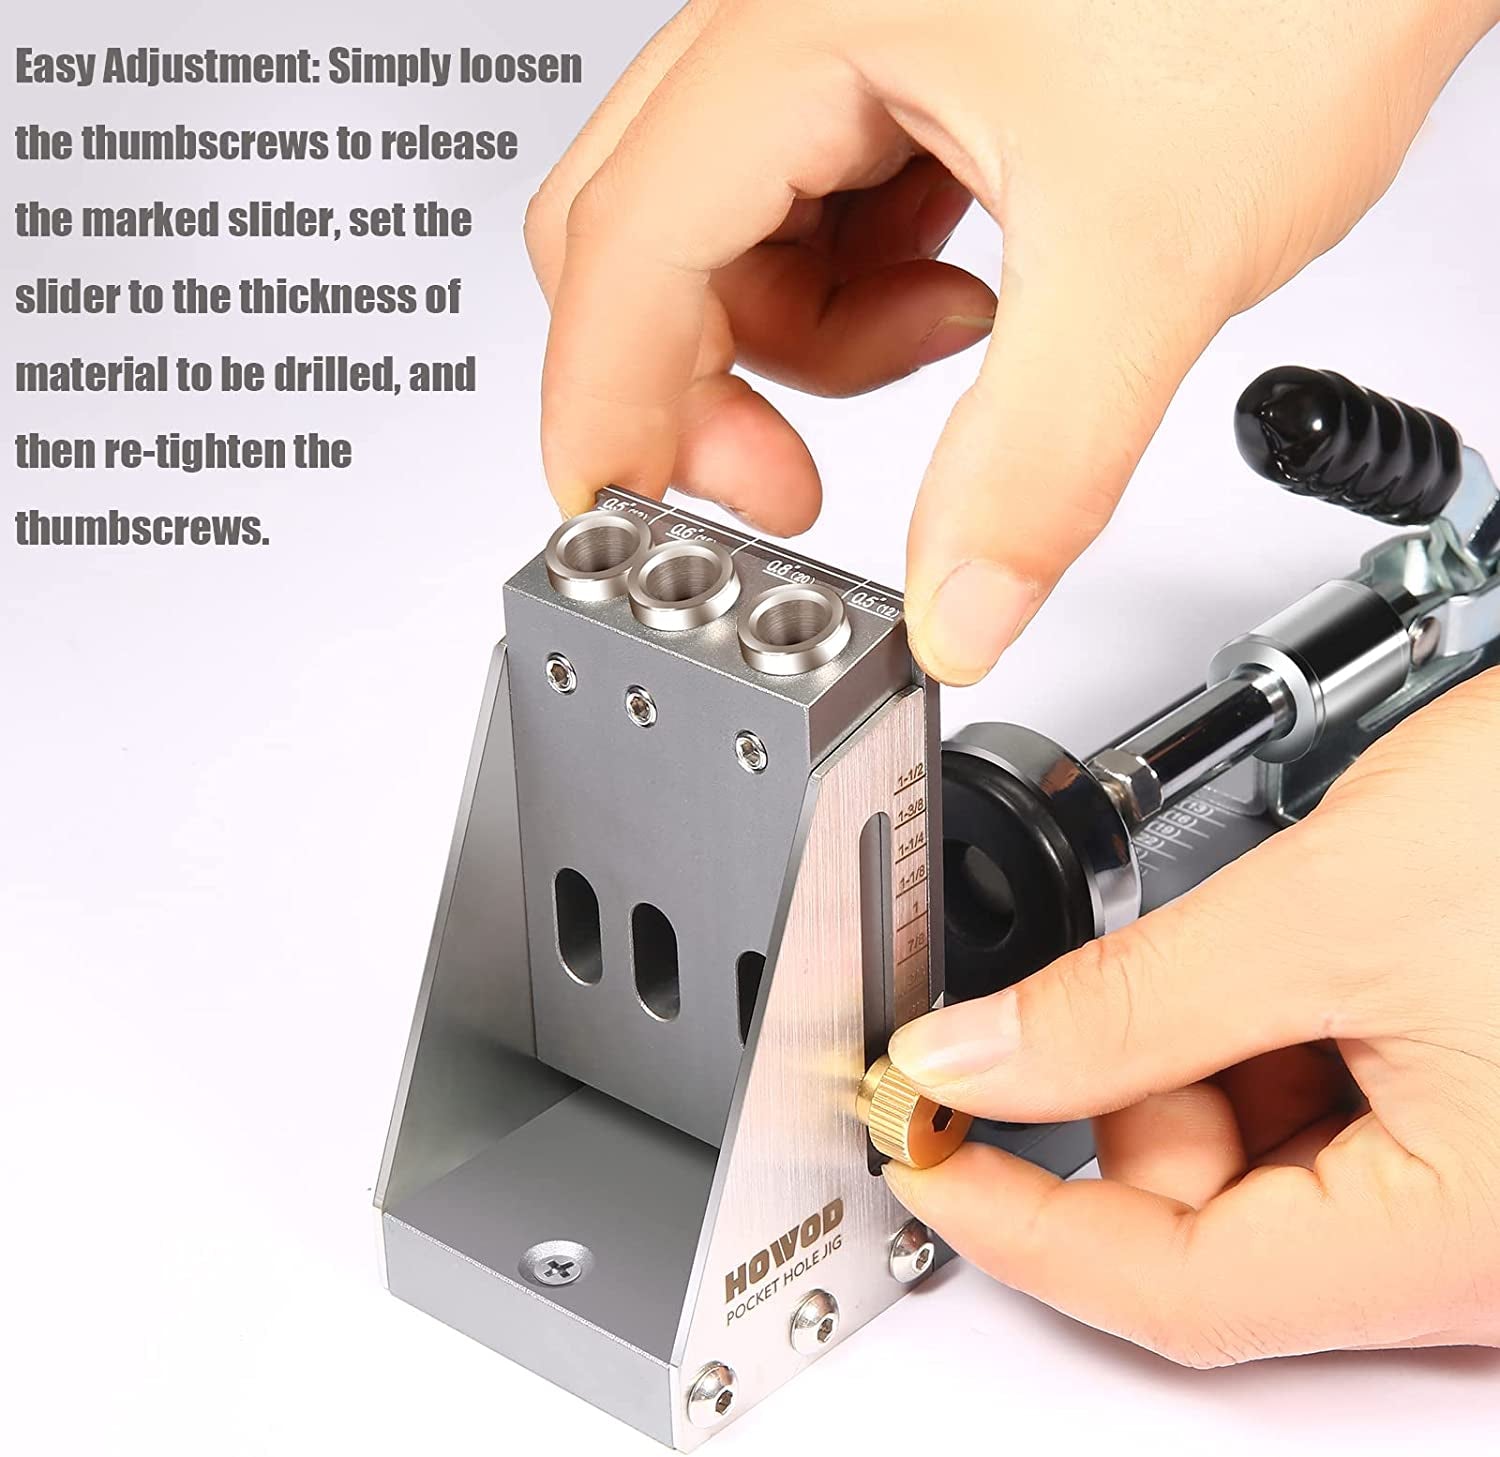 Pocket Hole Jig Kit, Professional and Upgraded All-Metal Pocket Screw Jig.